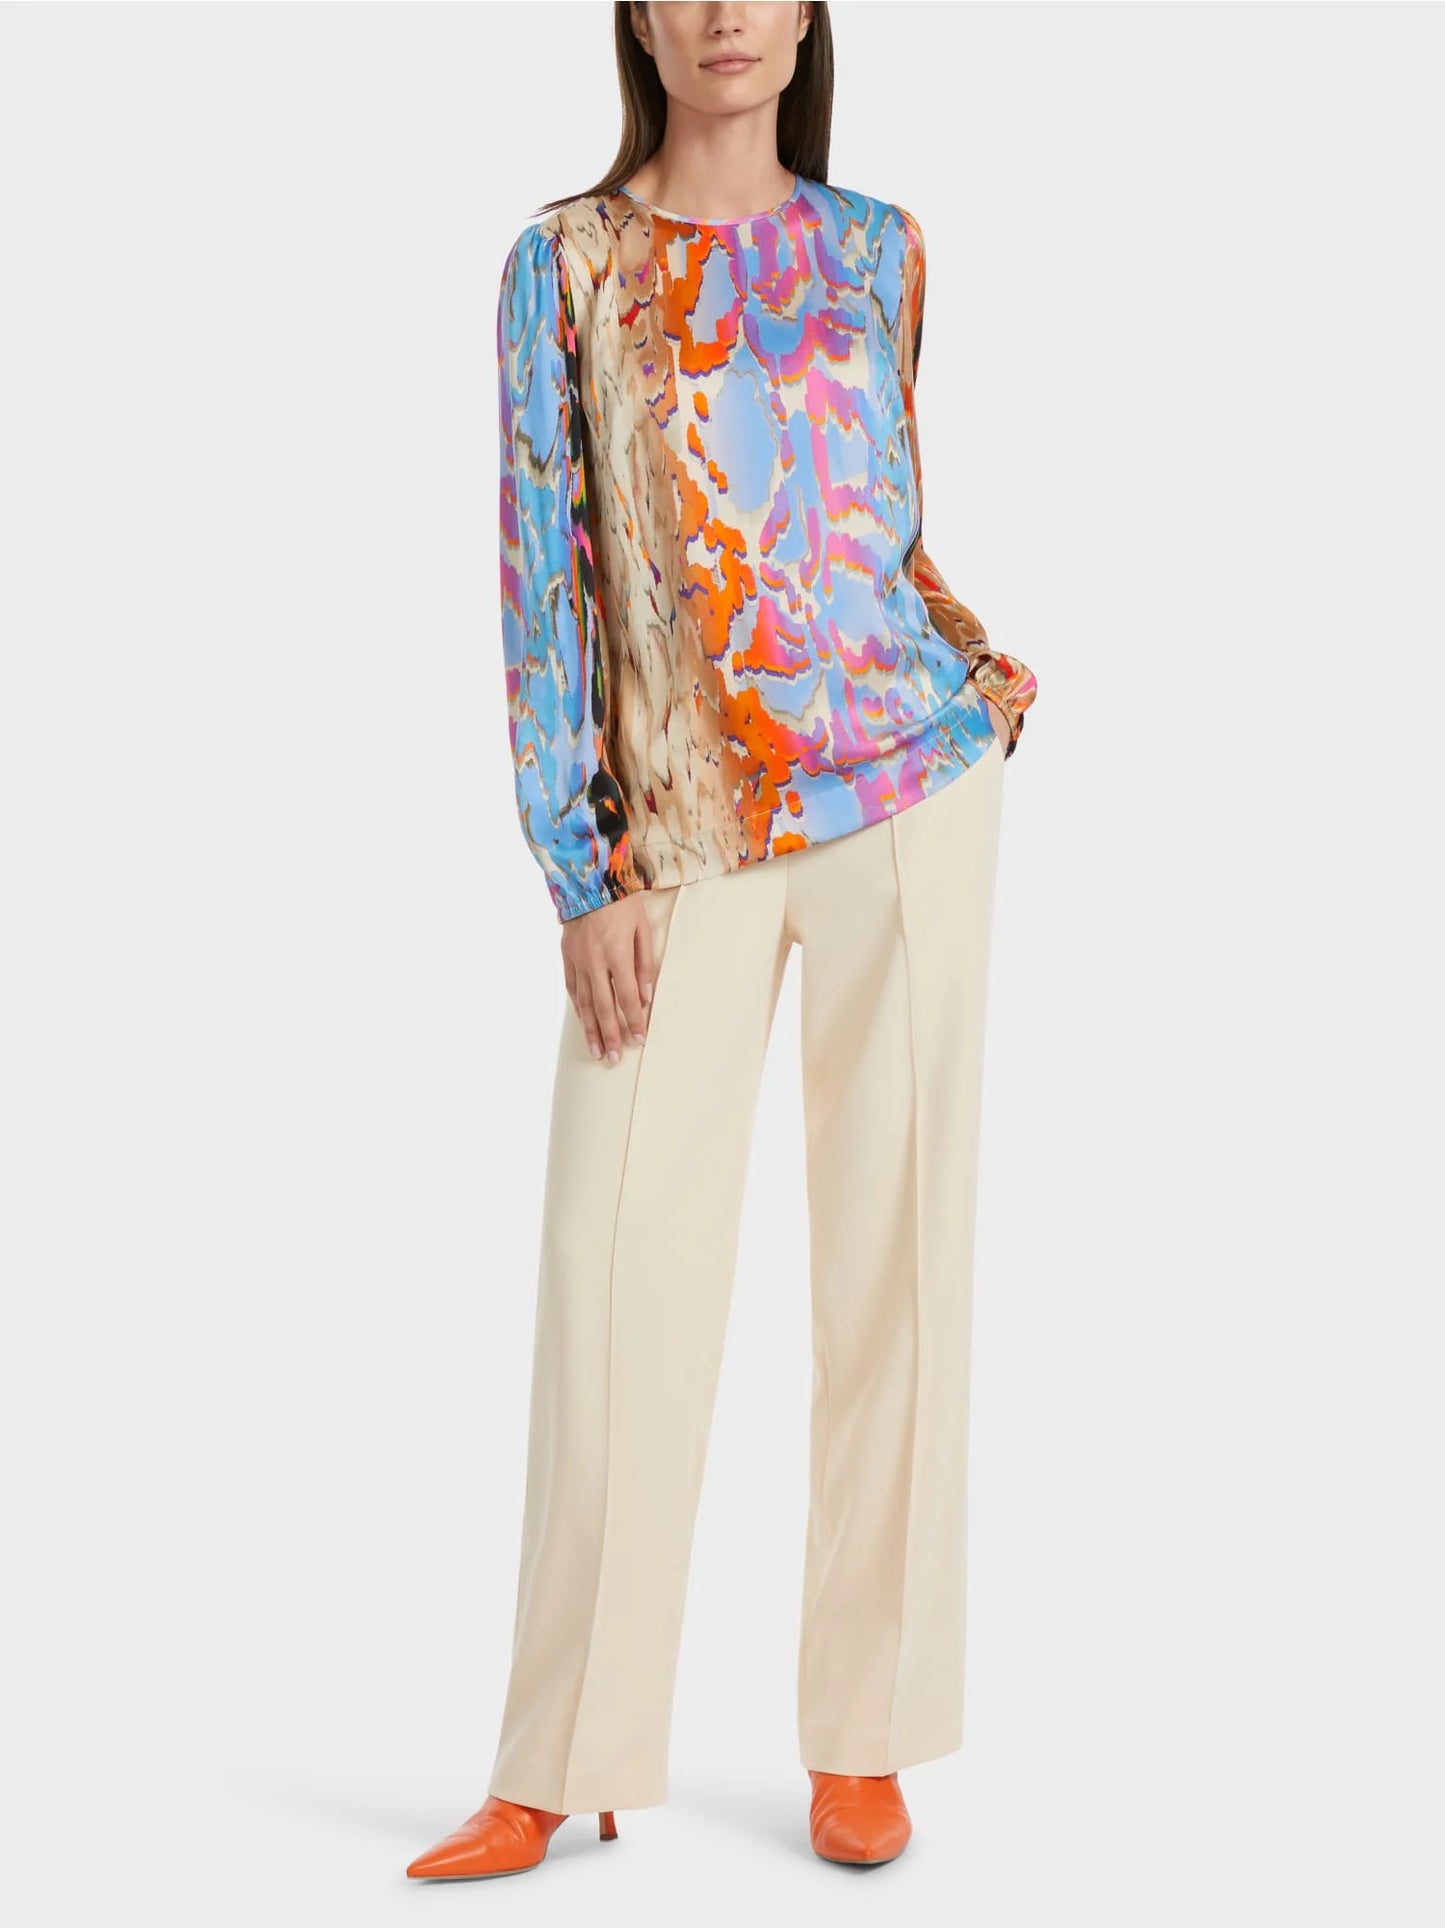 Colourful silk blouse